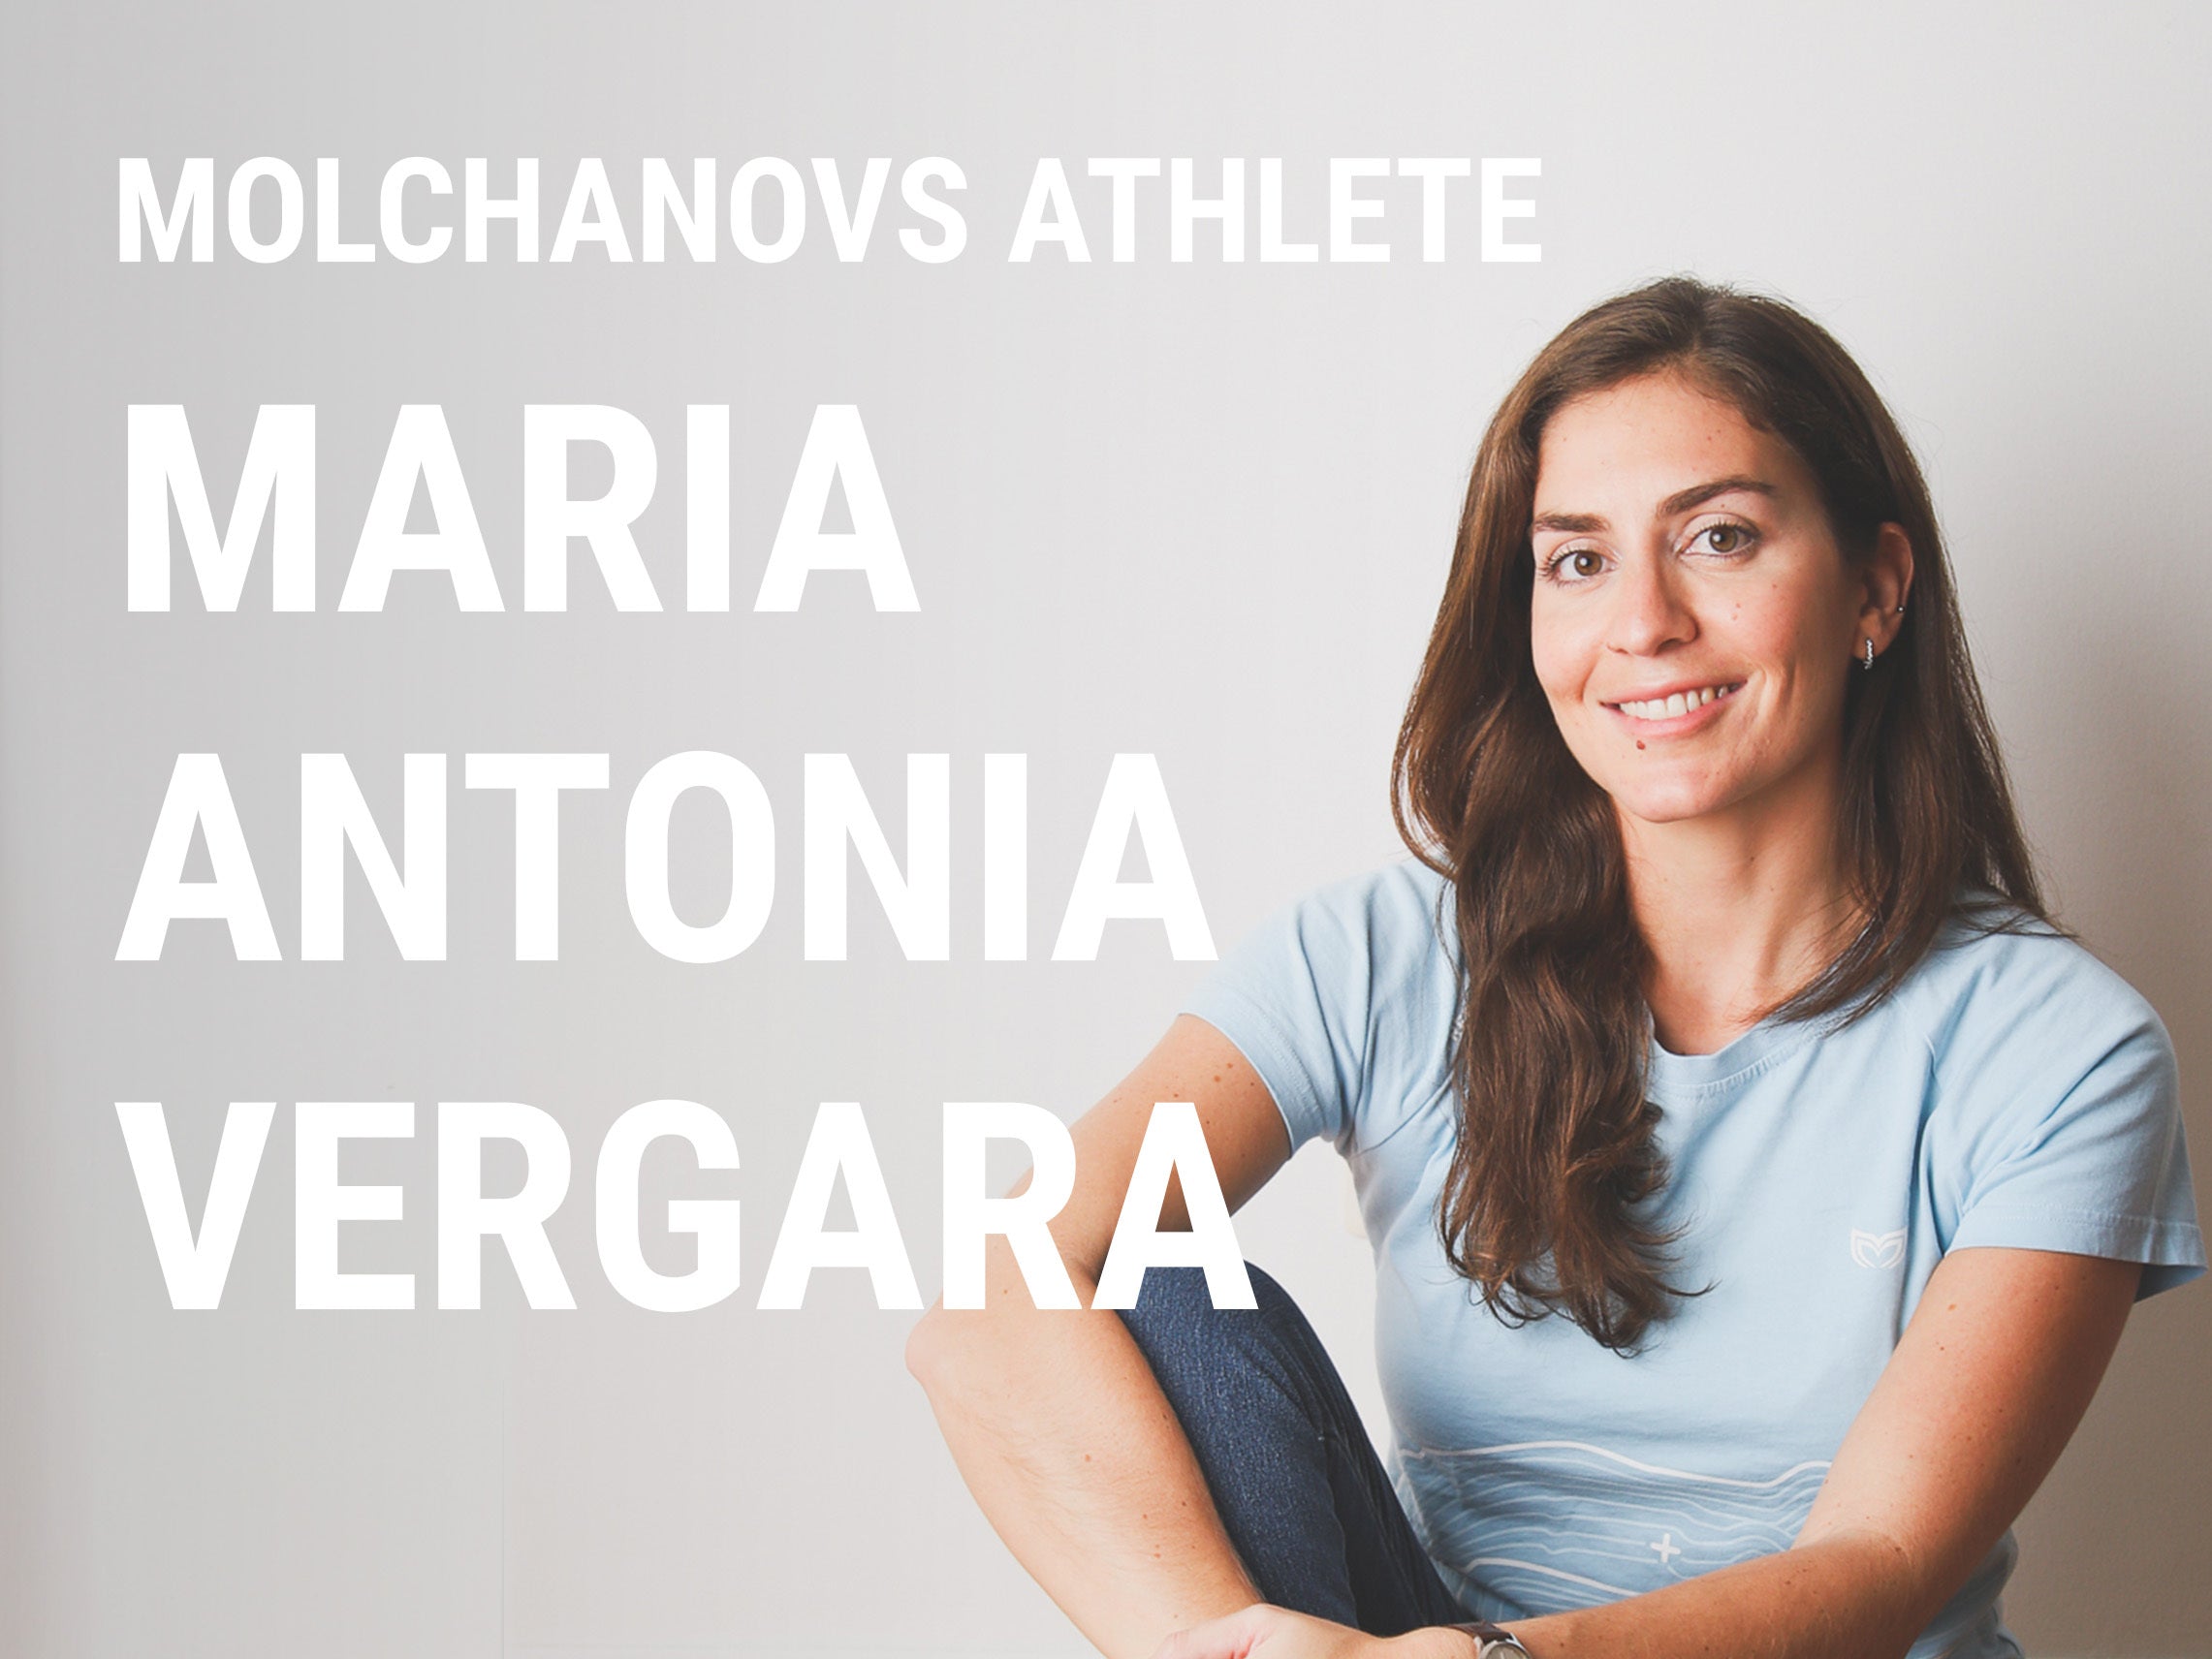 Molchanovs Athlete Interview: Maria Antonia Vergara from Panama